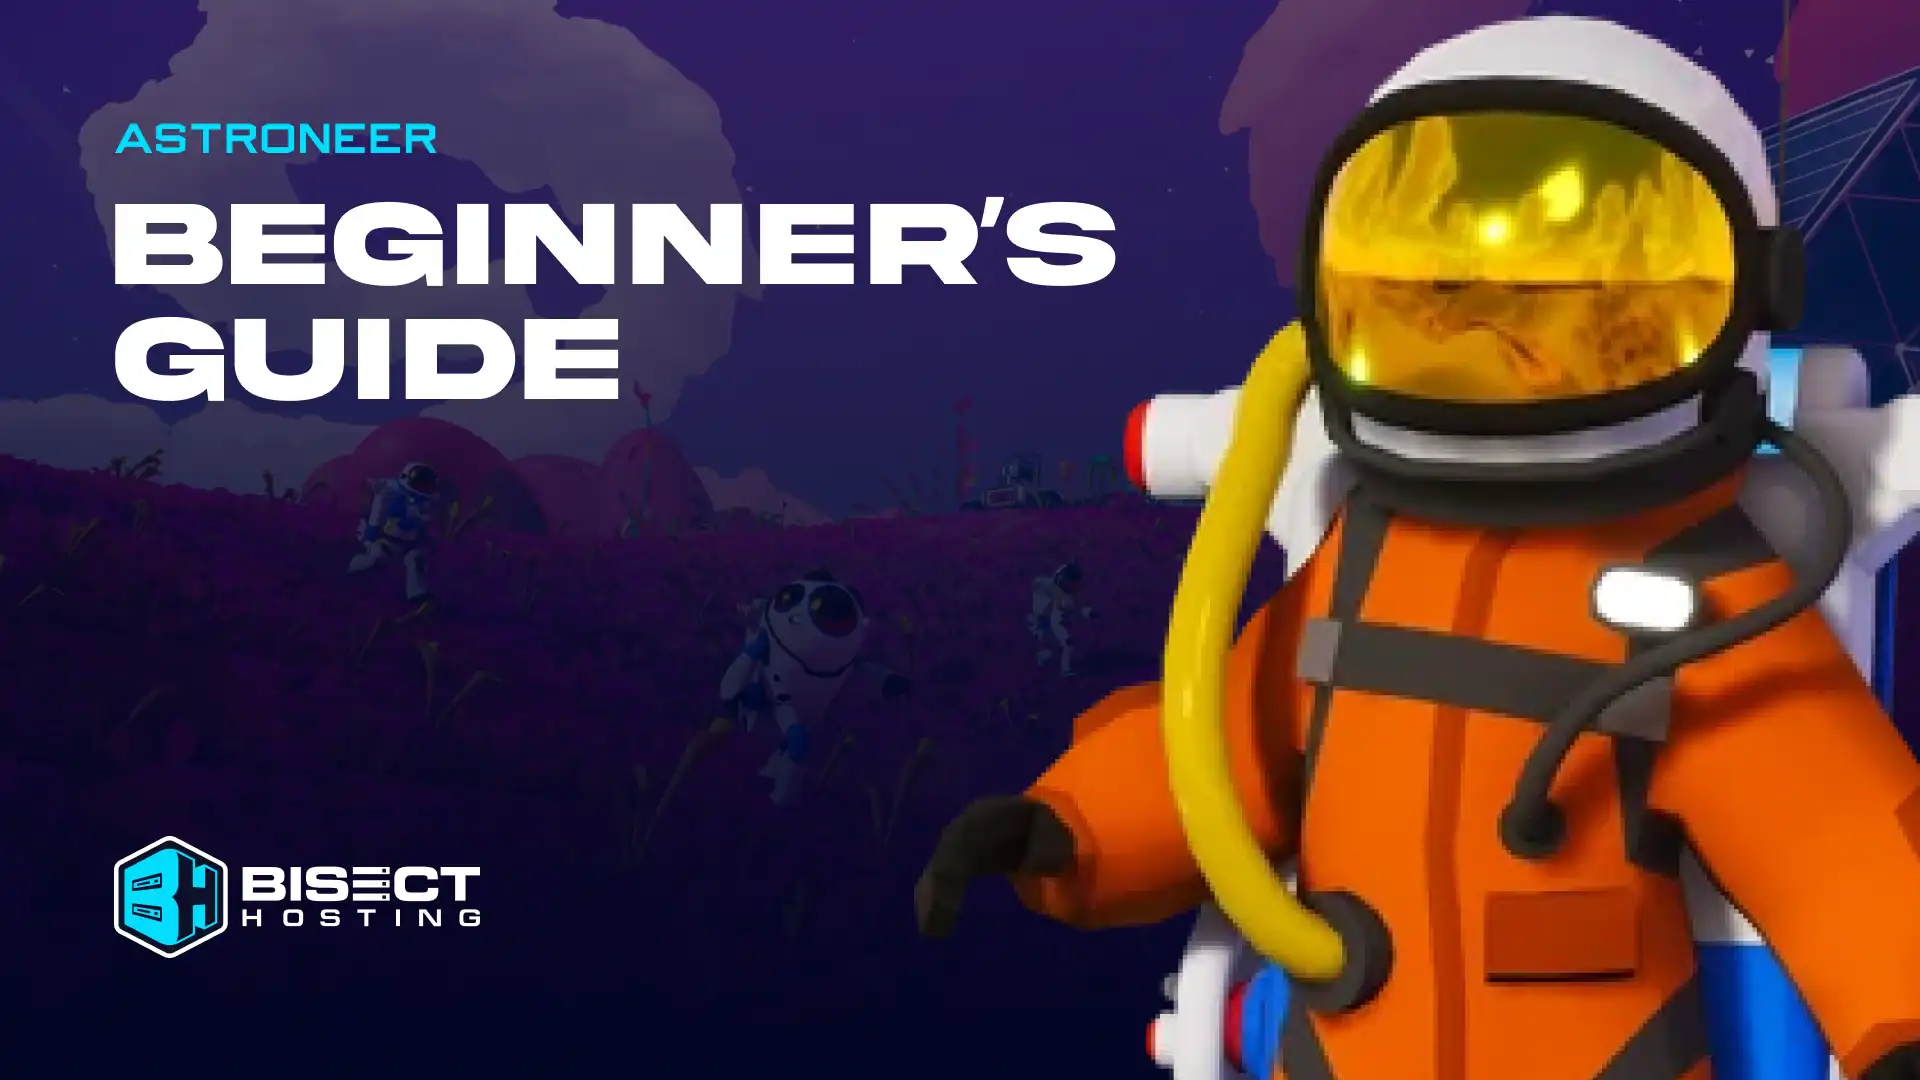 Astroneer Beginner’s Guide